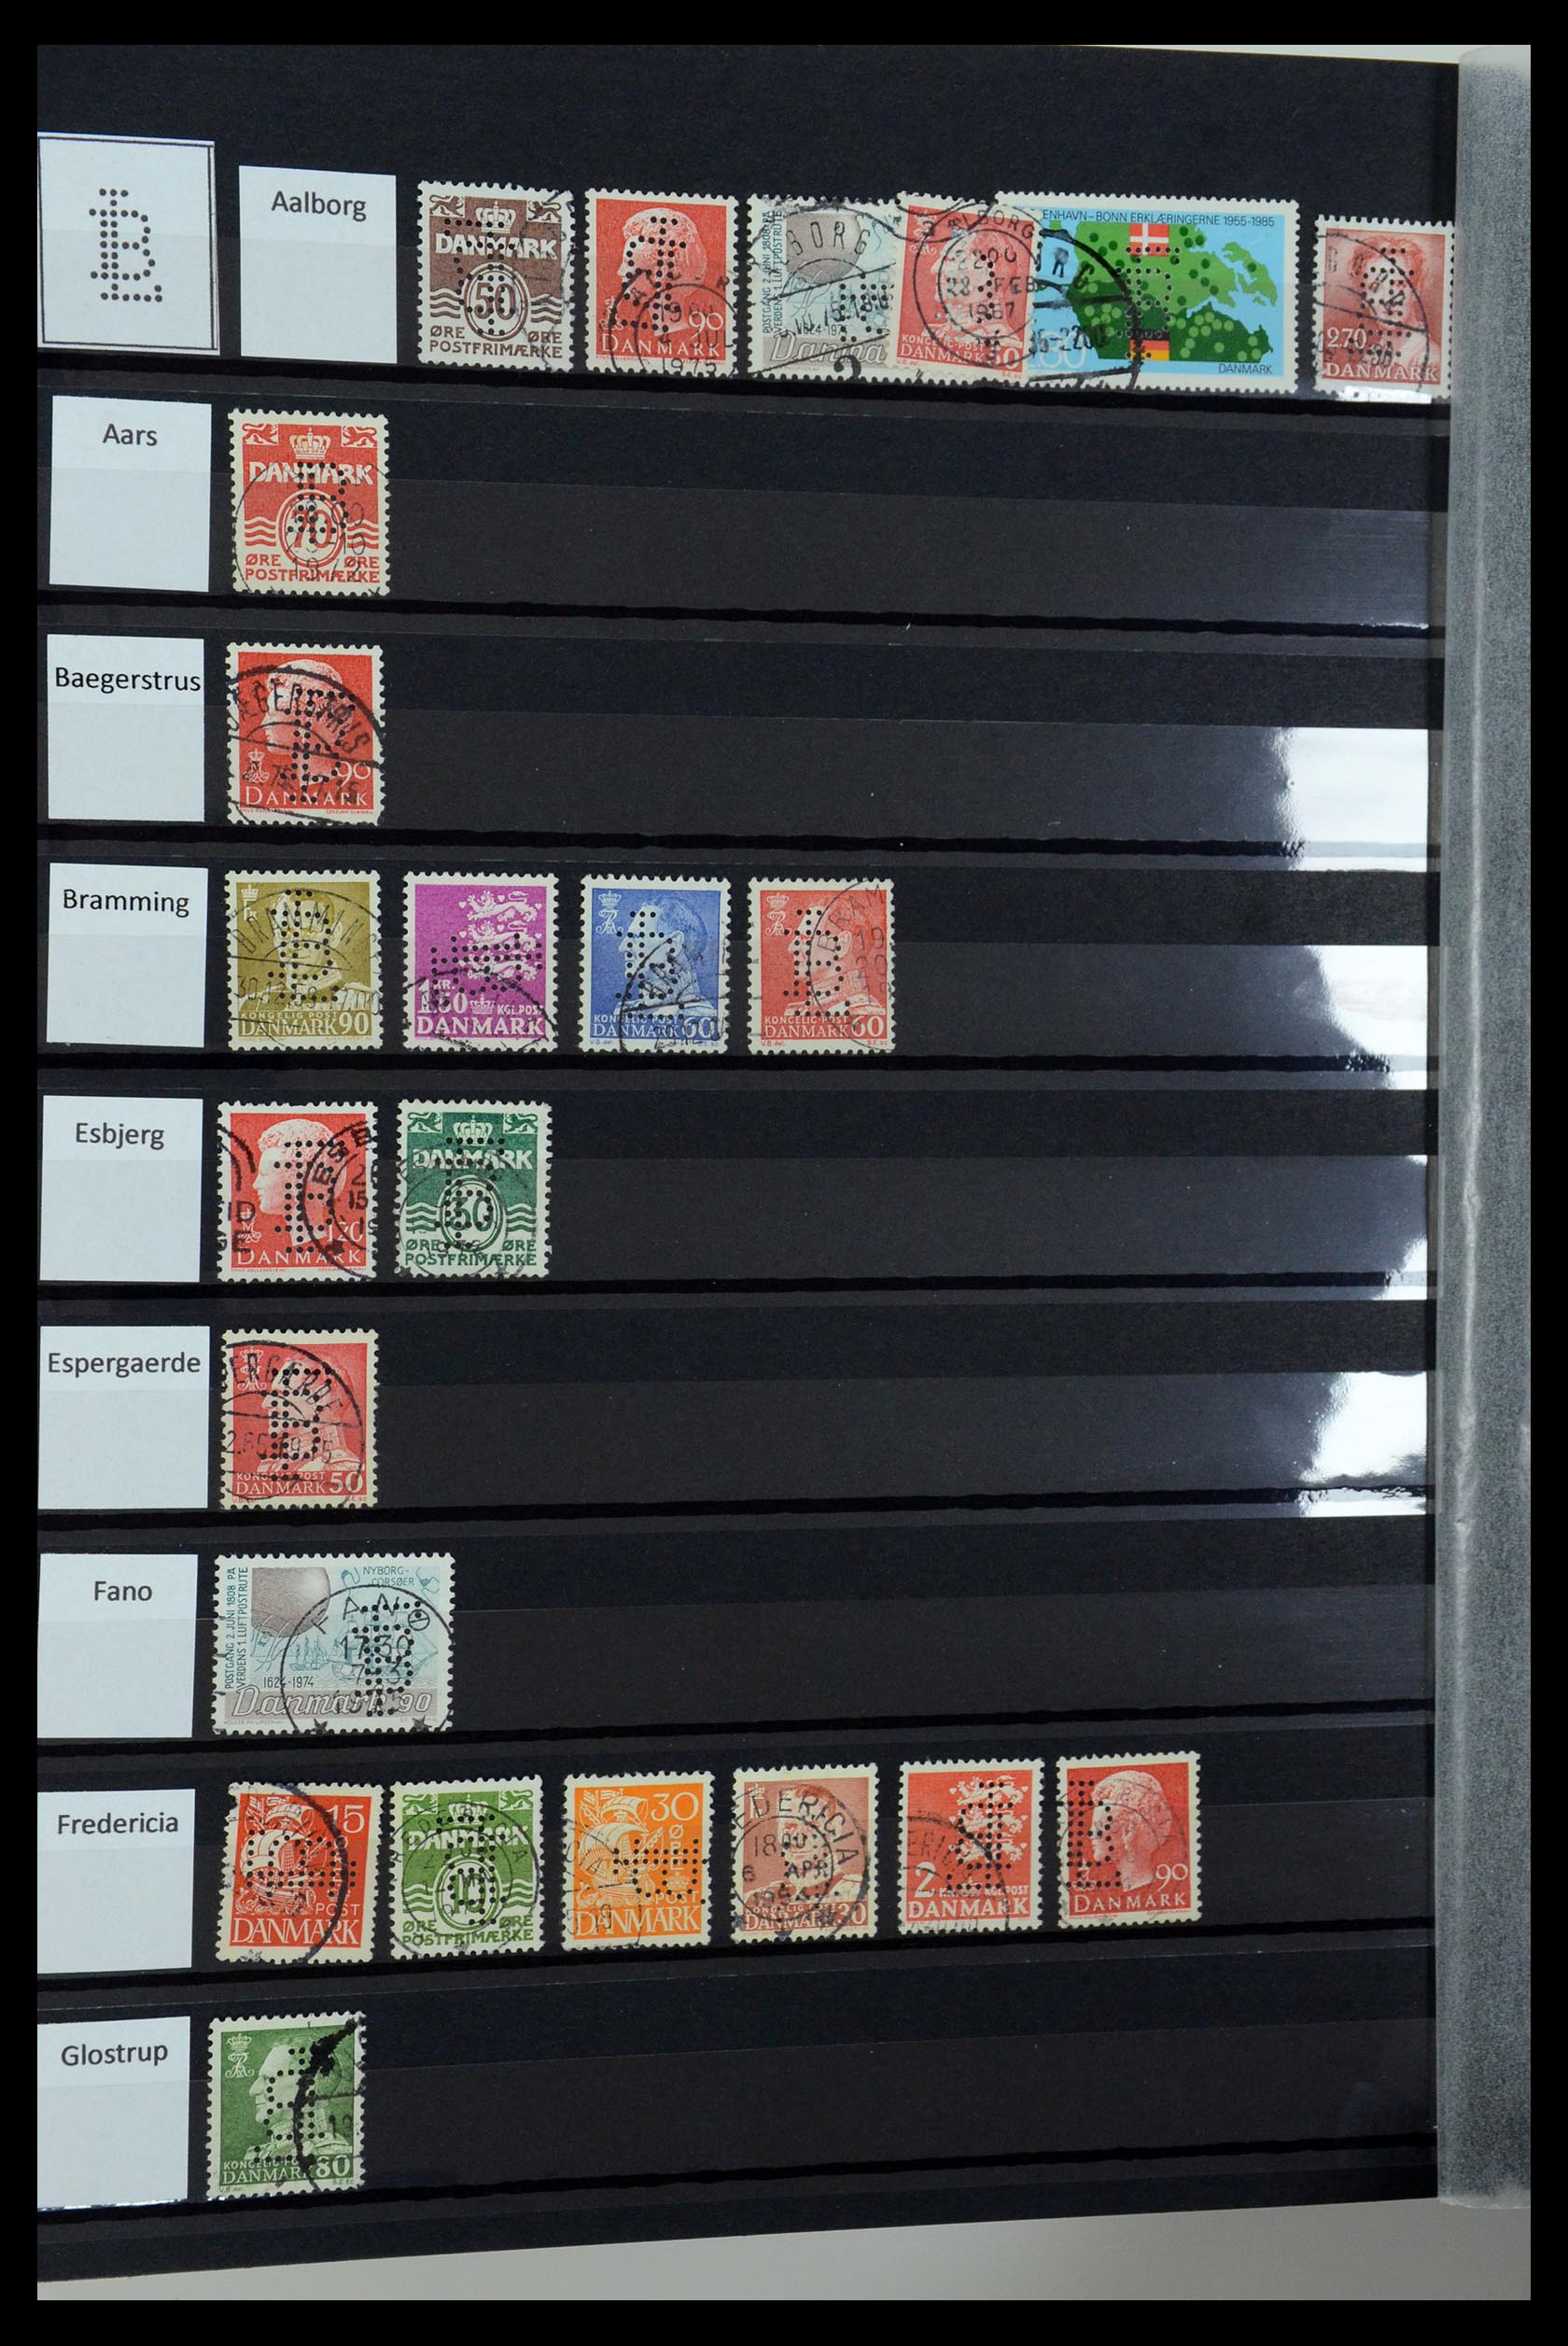 36396 089 - Stamp collection 36396 Denmark perfins.